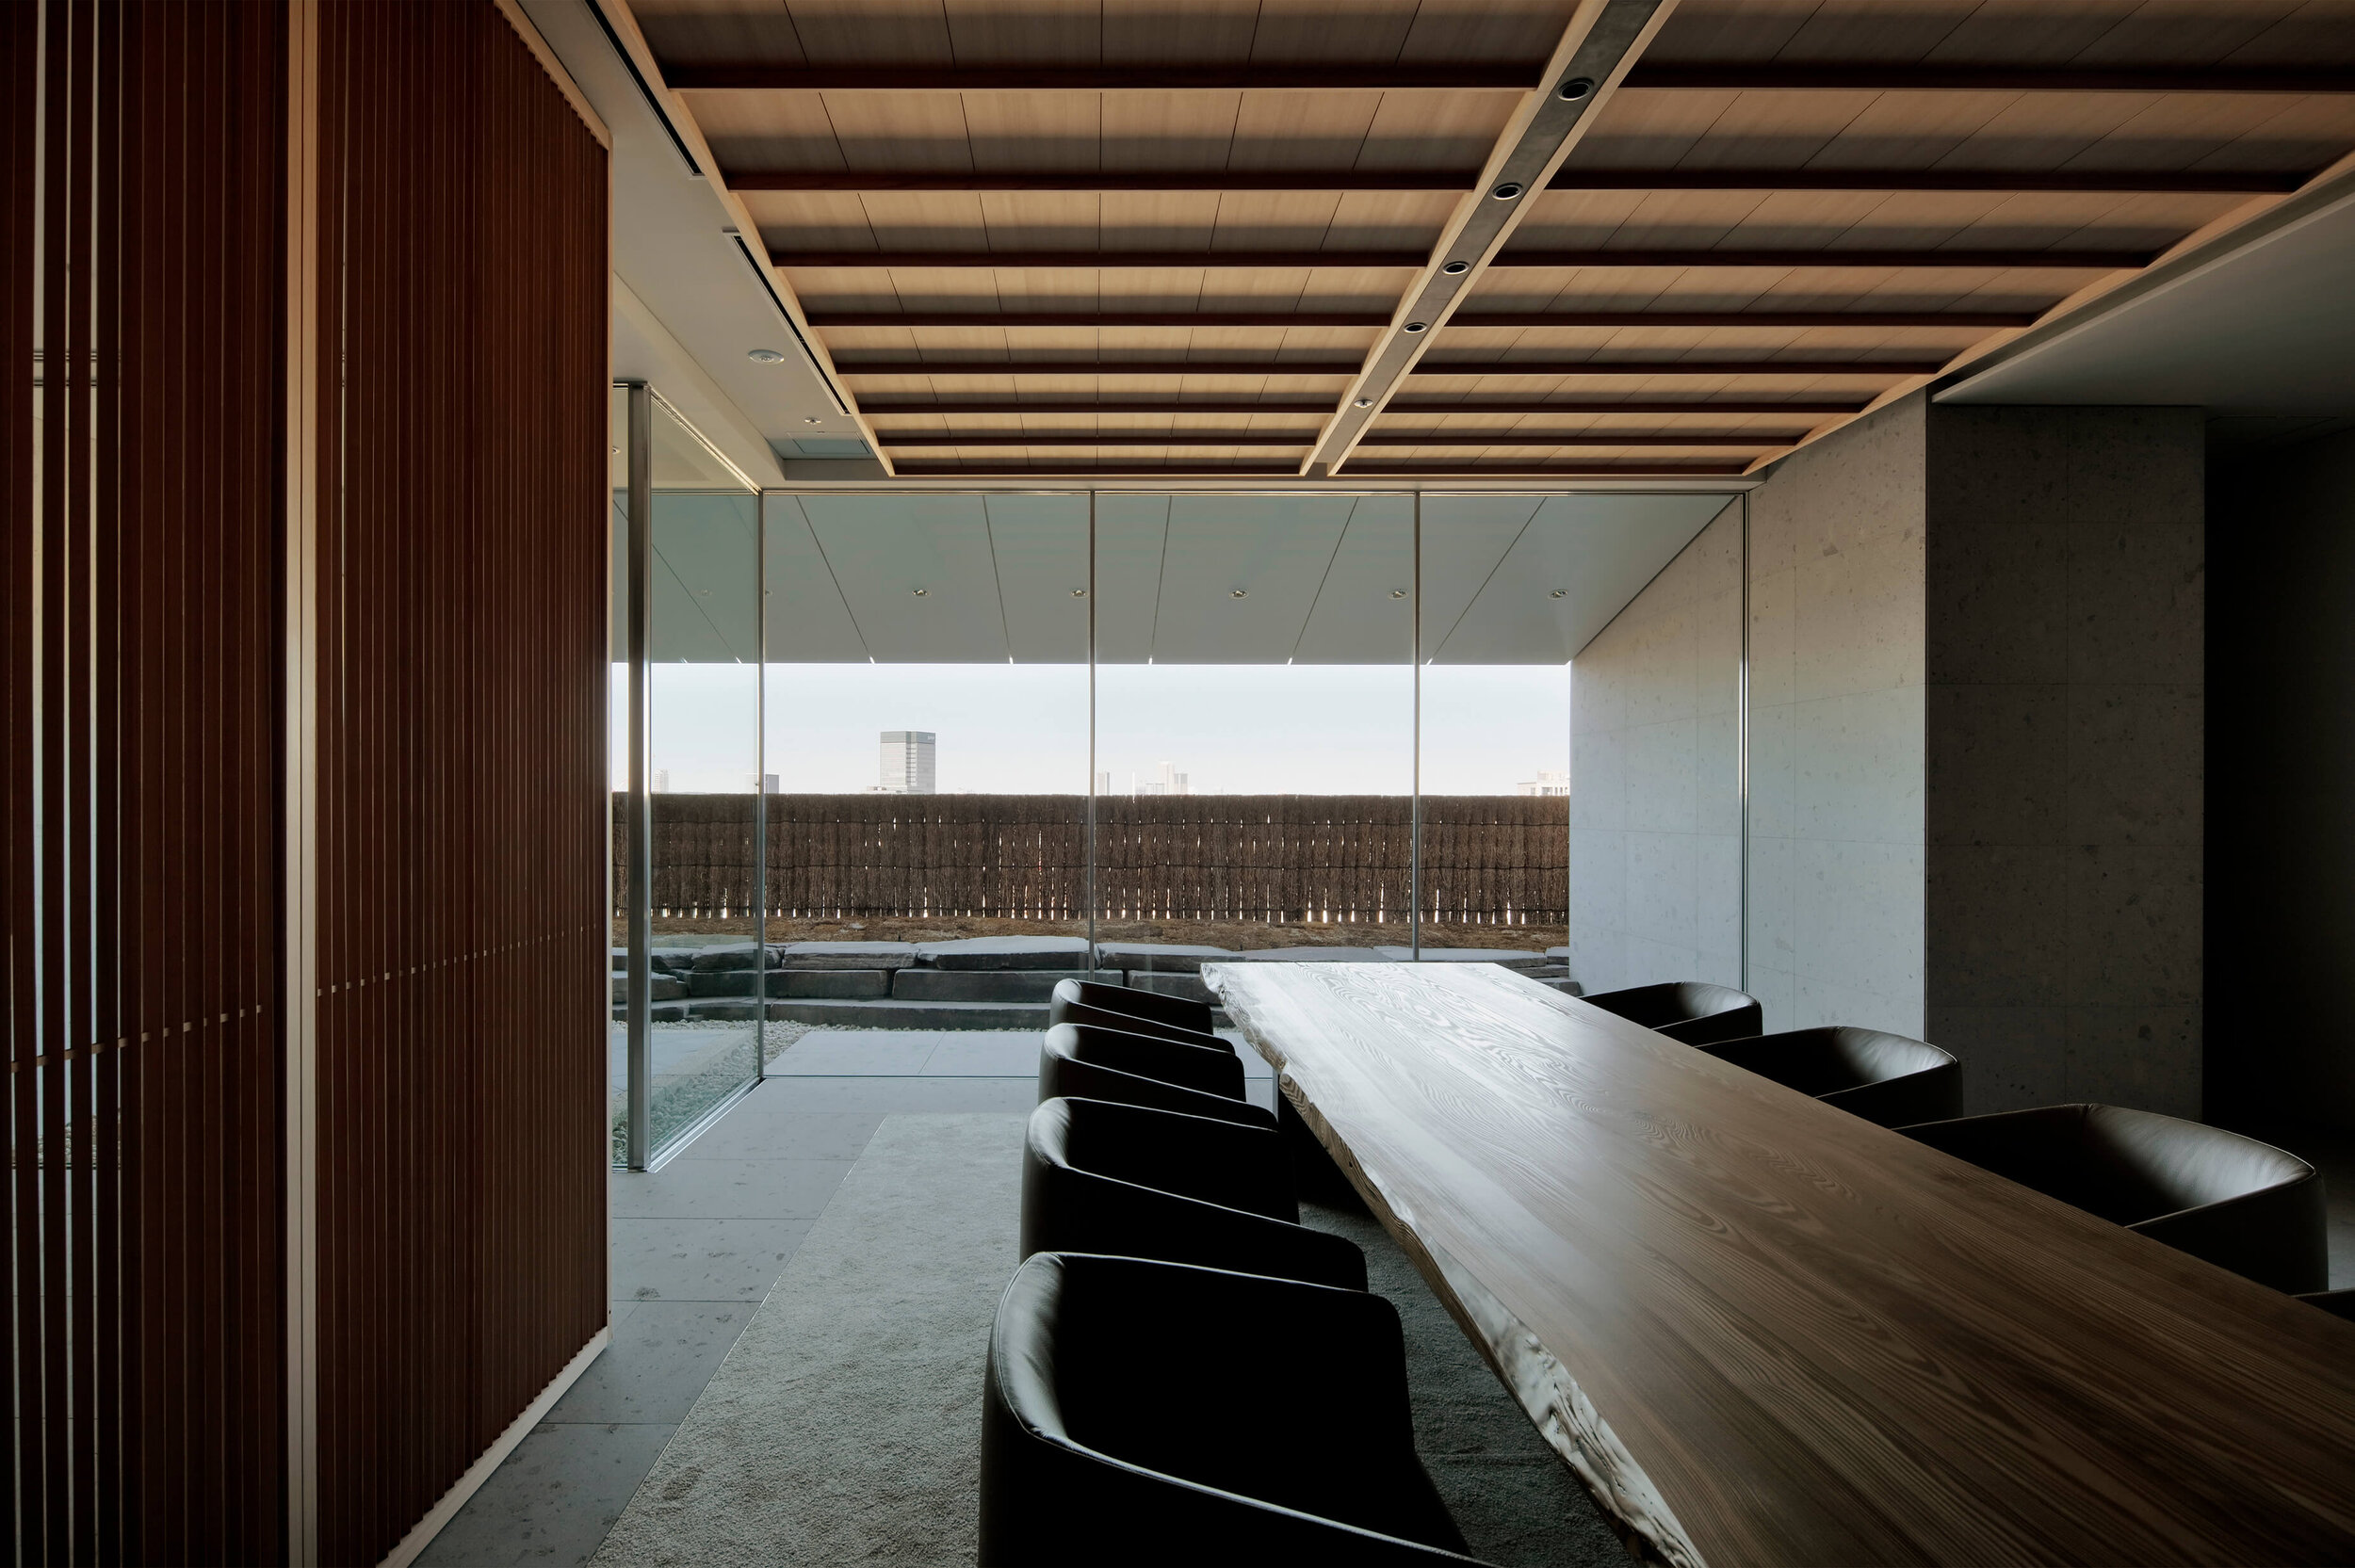 sakakida-tomoyuki-architect-ntv-office-interior-design-tokyo-japan-idreit-011m.jpg